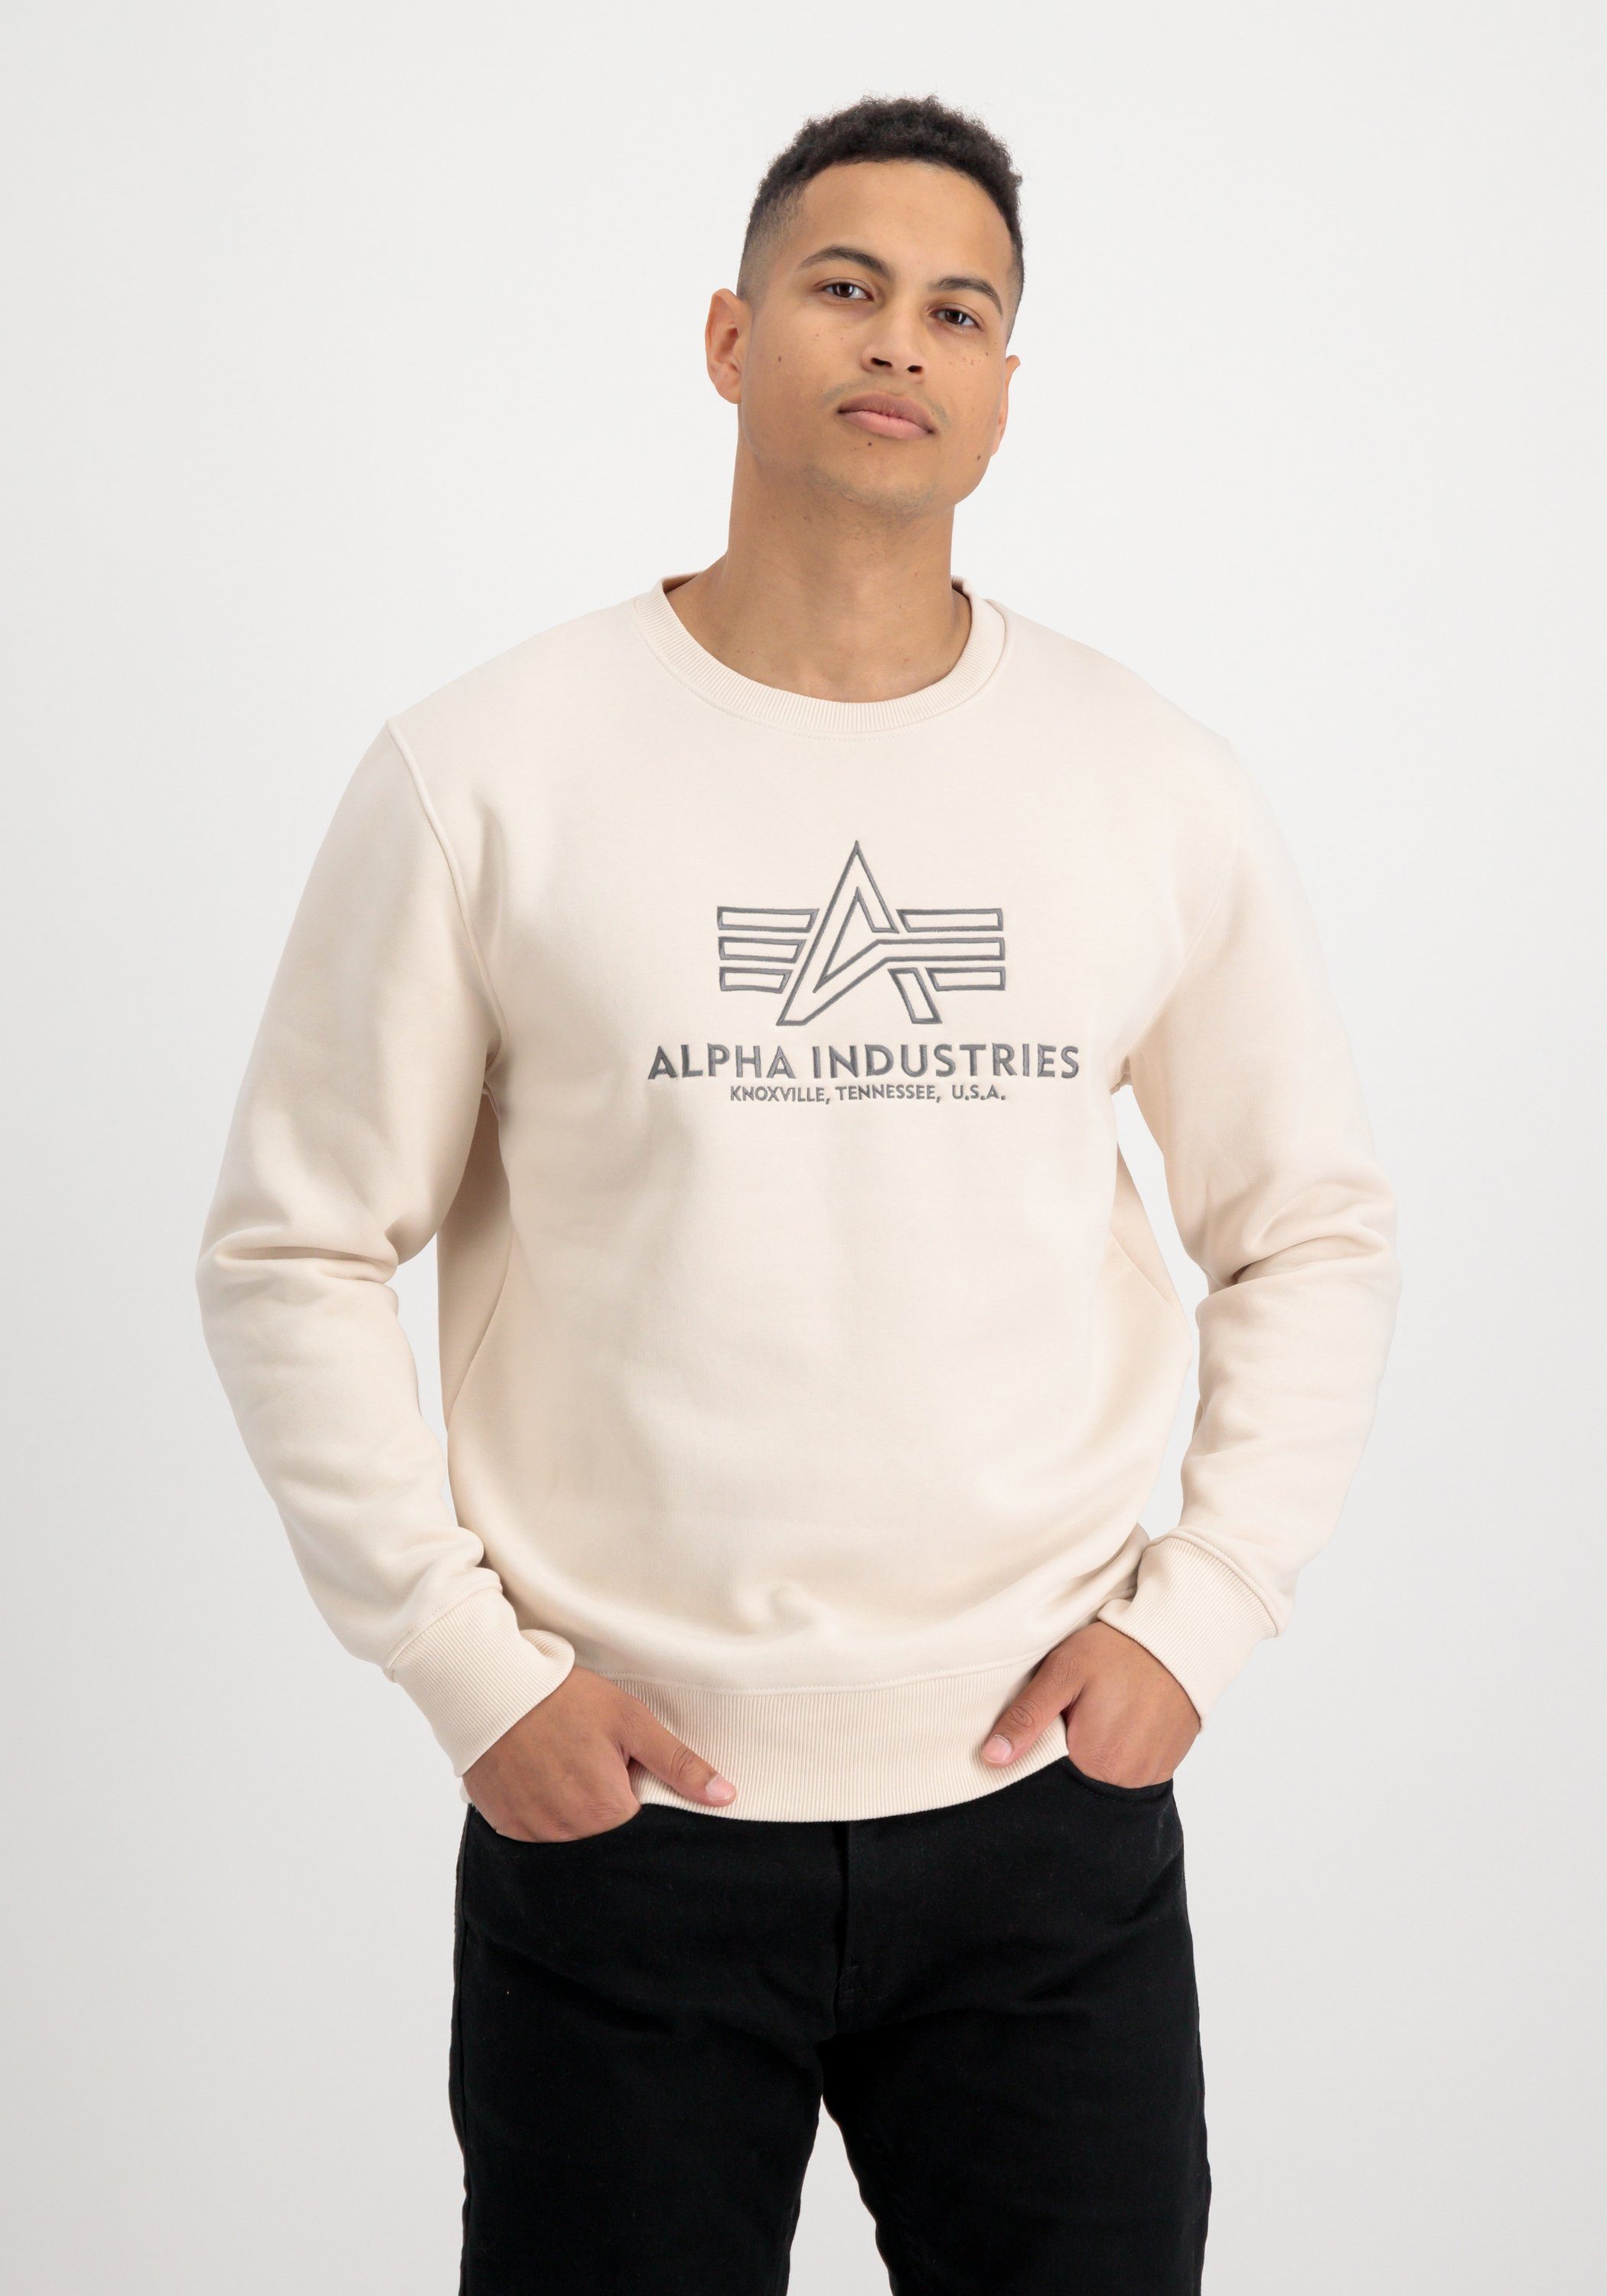 Alpha Industries Sweater Men Sweatshirts Basic Sweater Embroidery